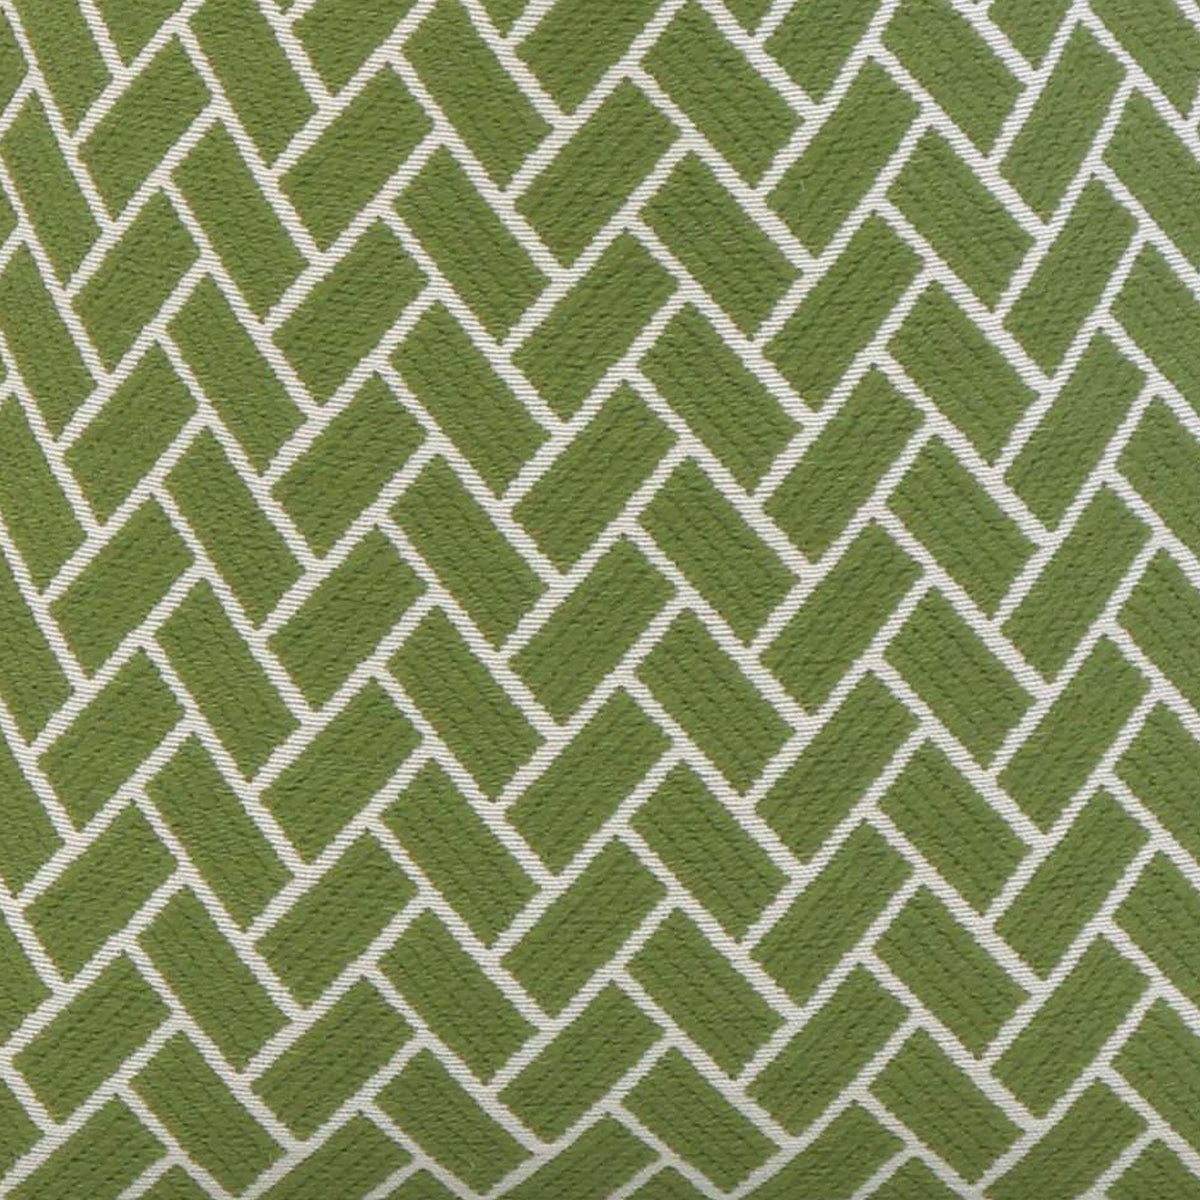 Cobblestone Performance Spring / 4x4 inch Fabric Swatch